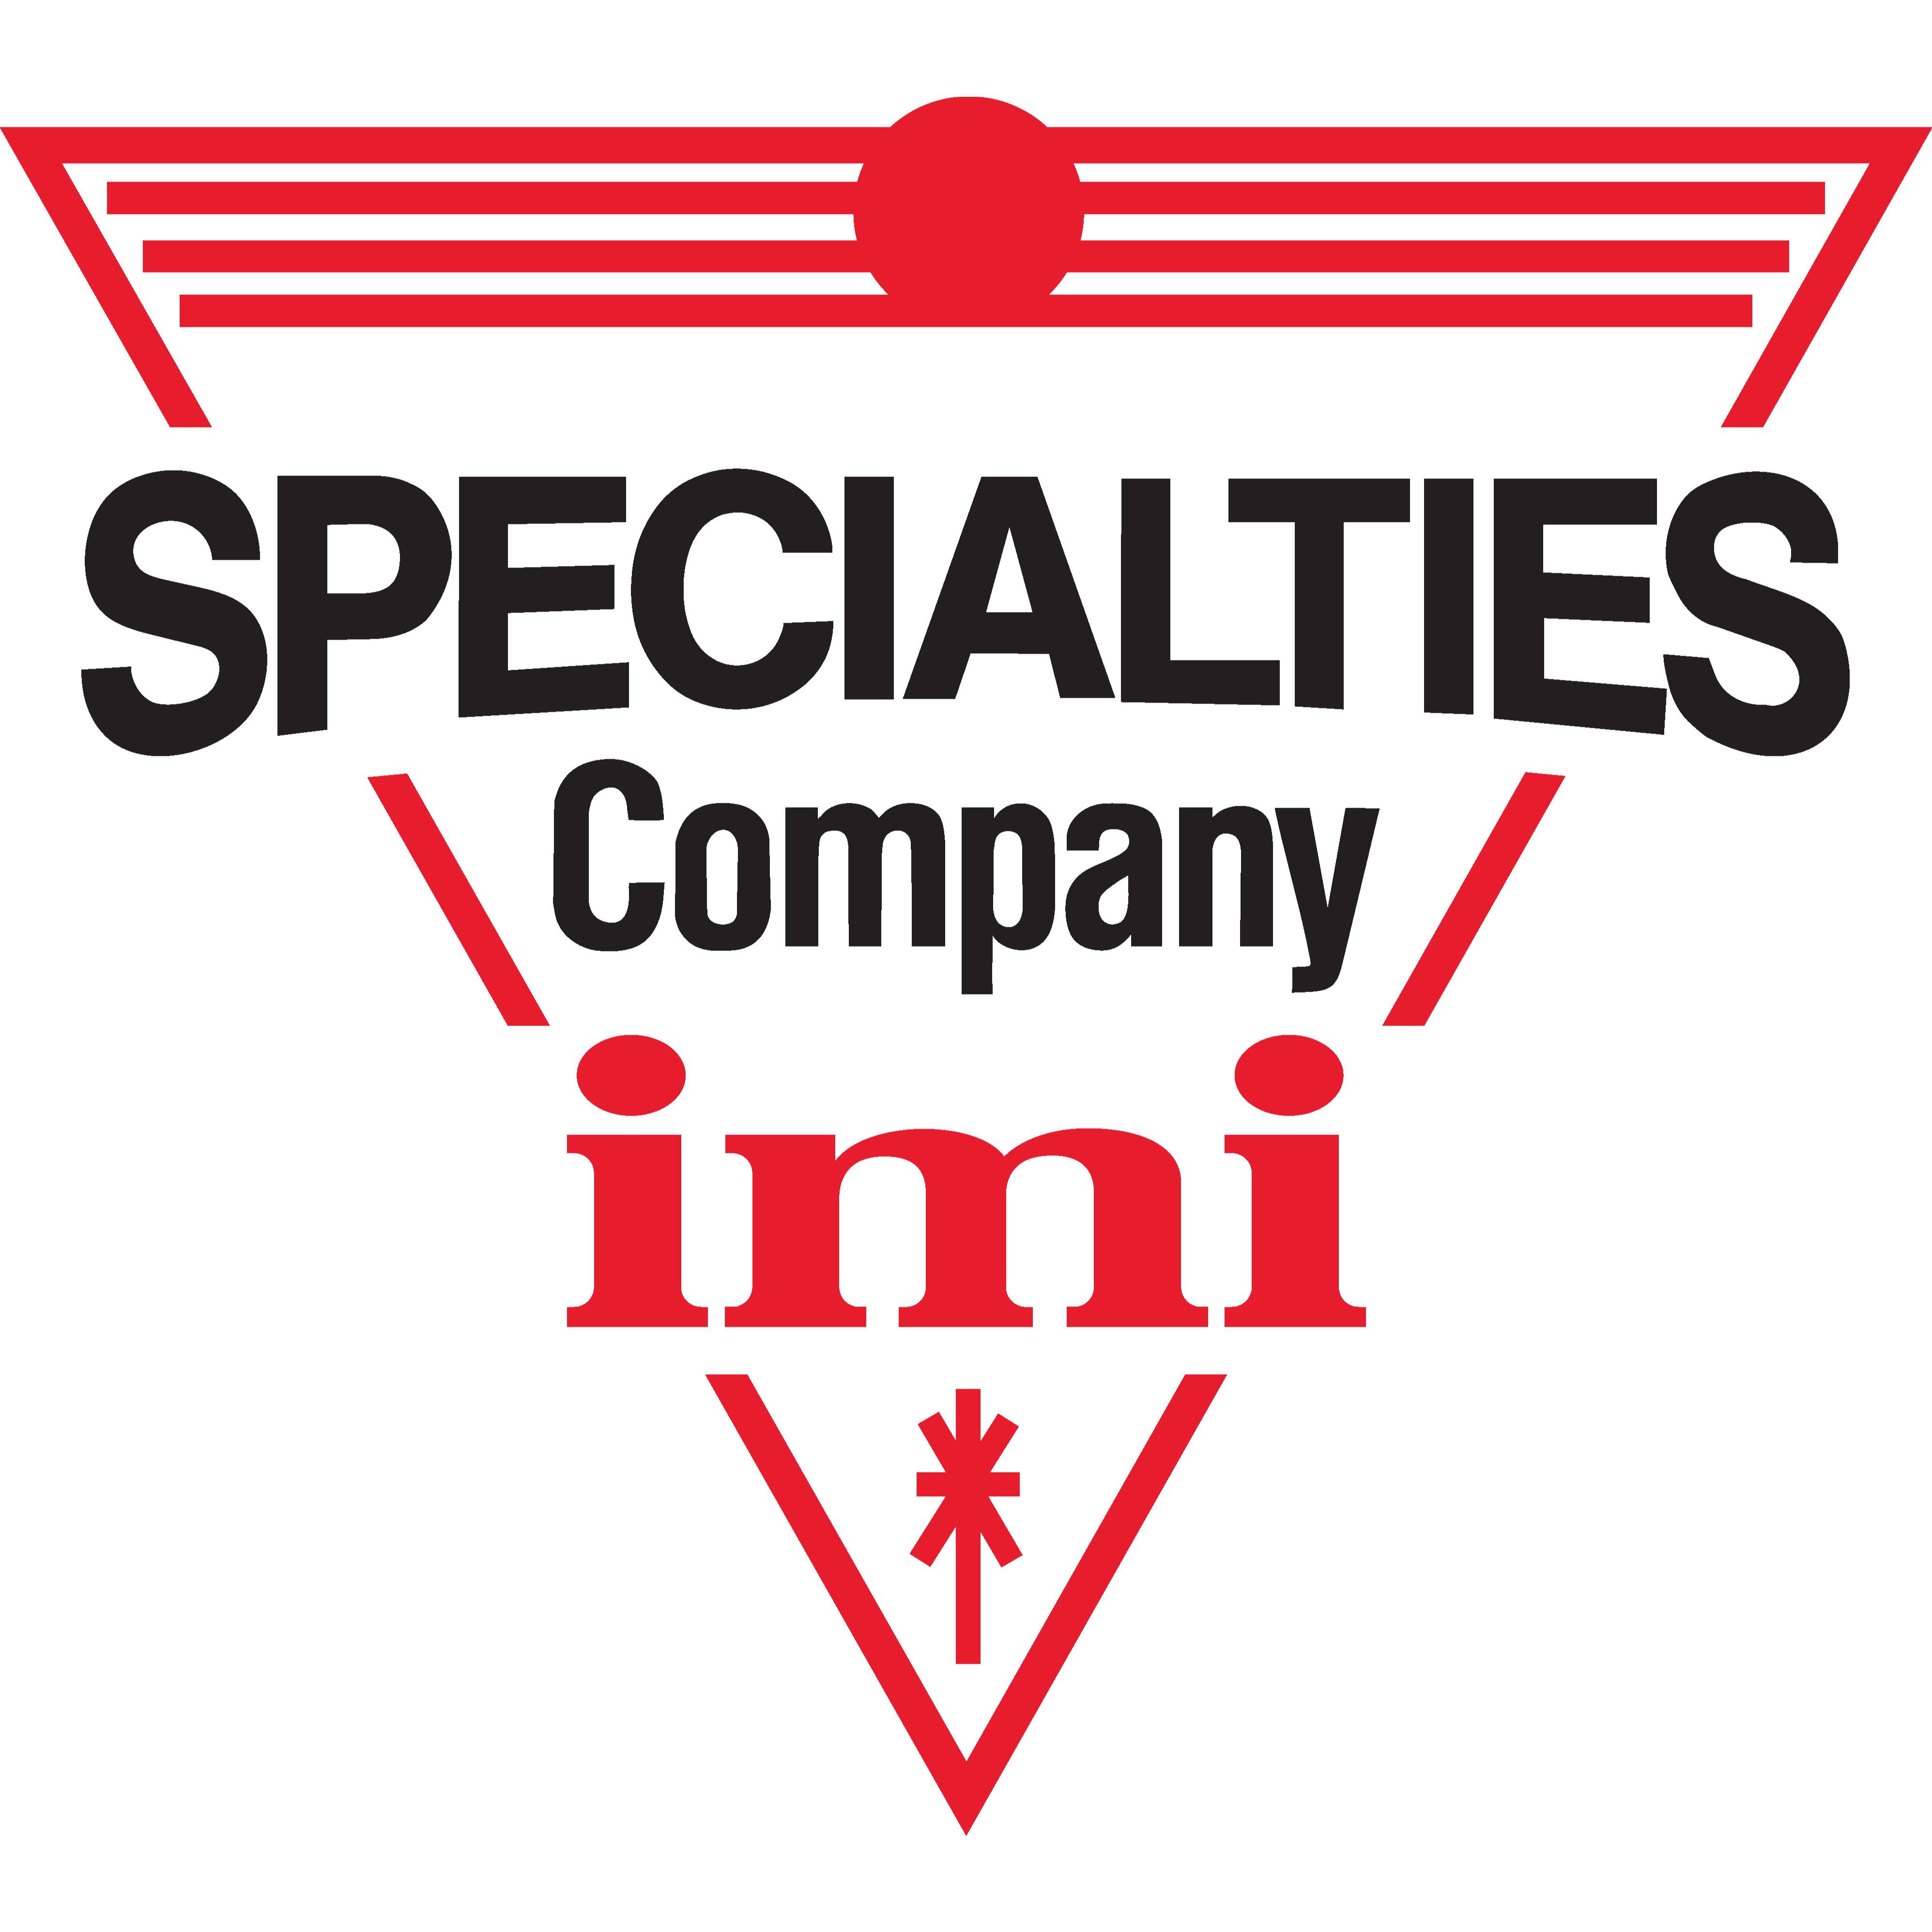 Specialties Company